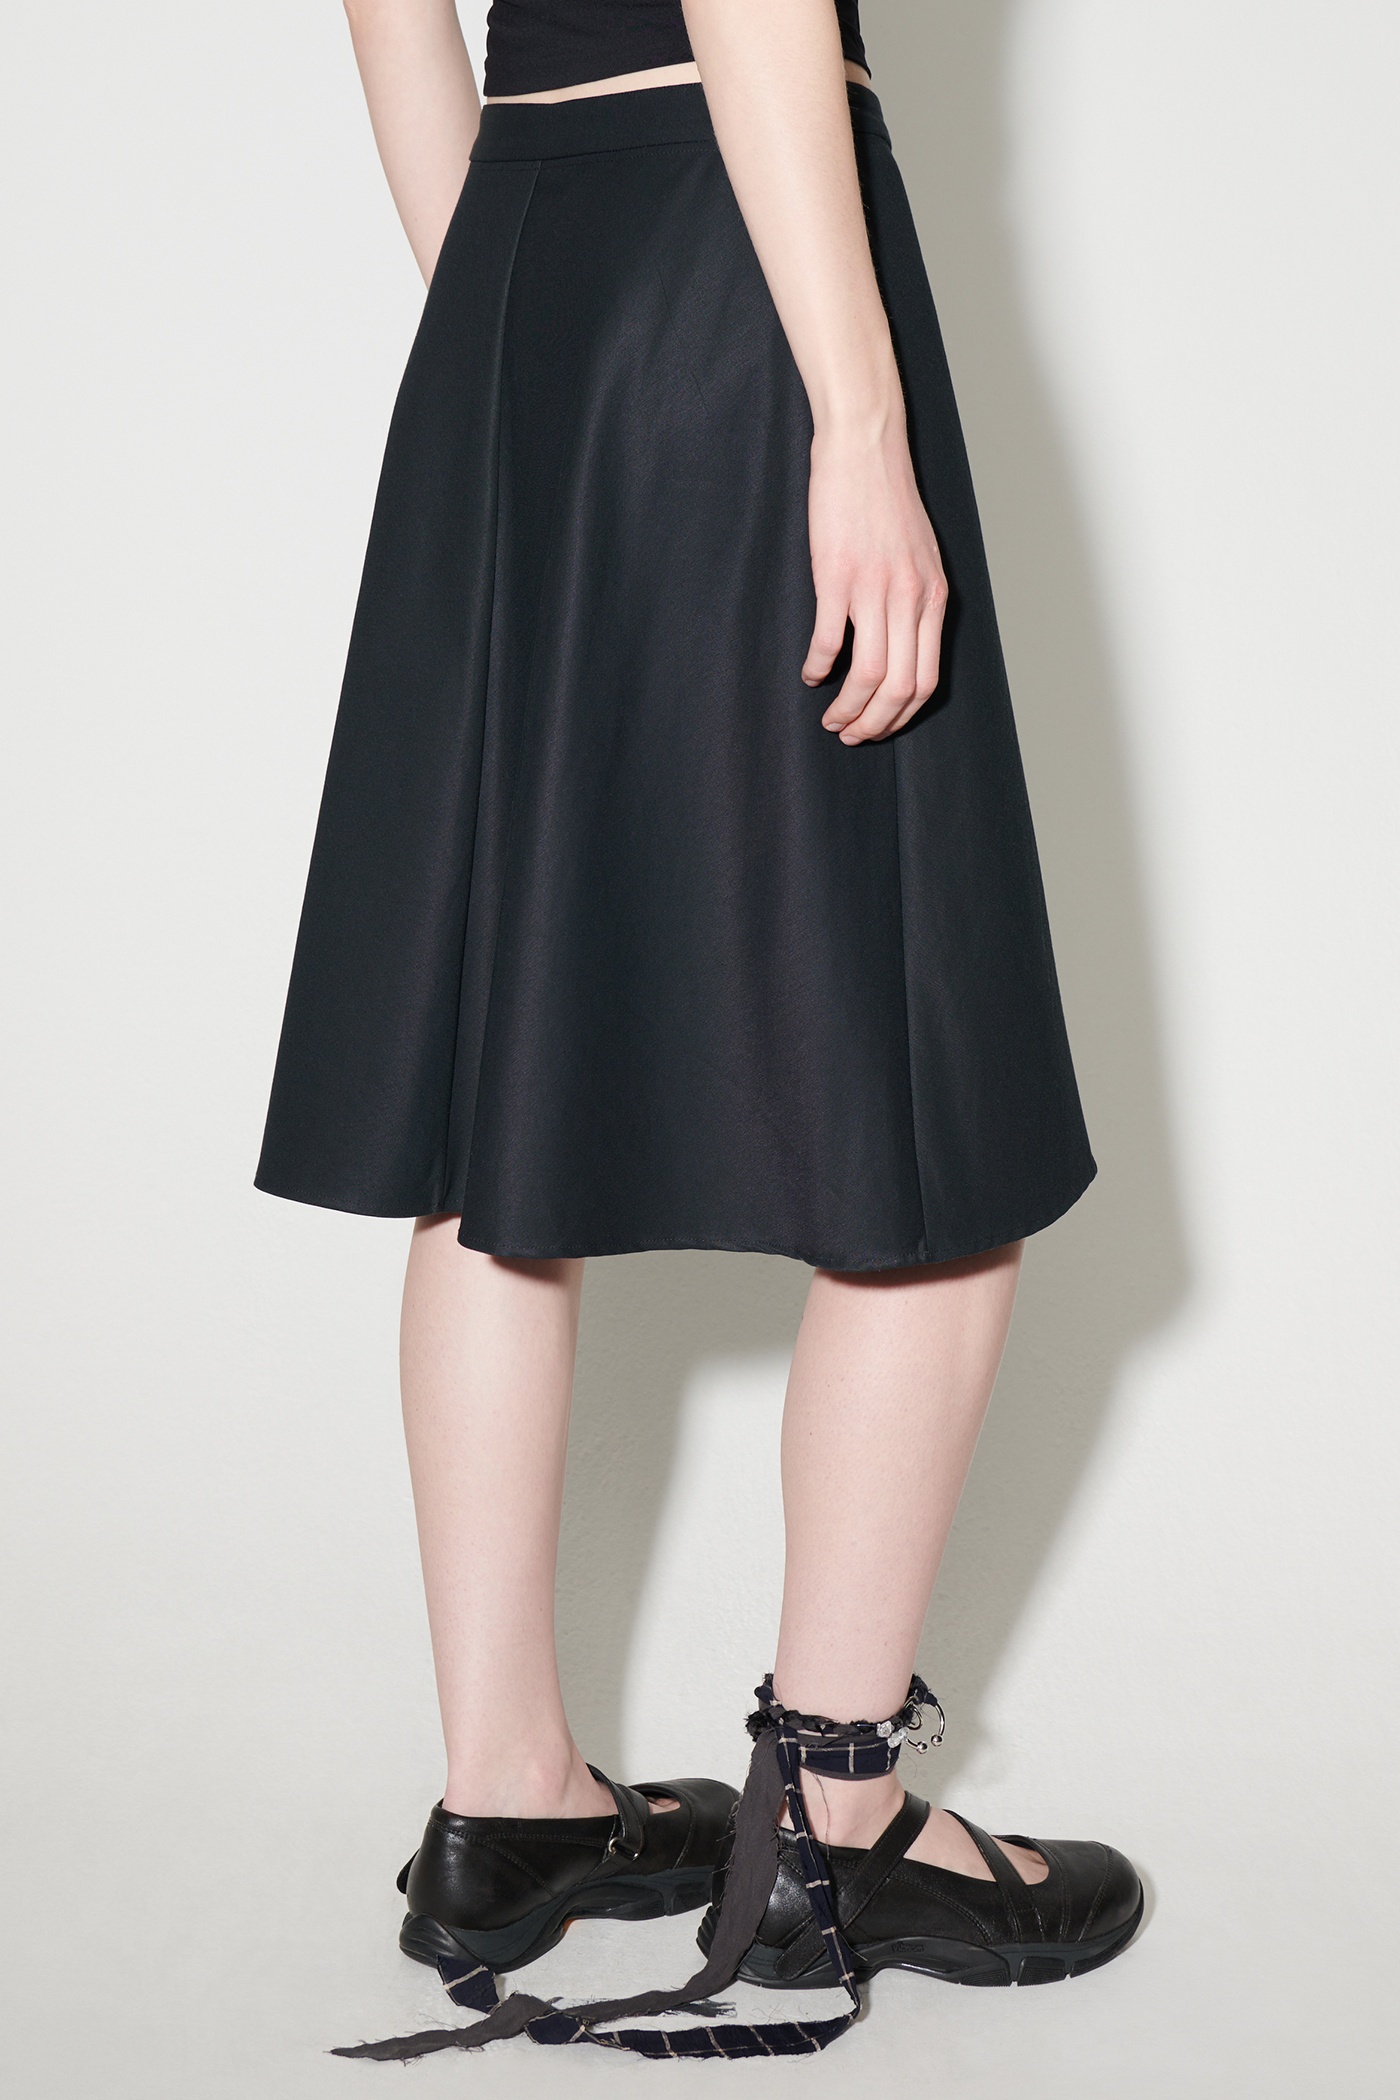 Curtain Skirt Deluxe Black Exquisite Wool - 4